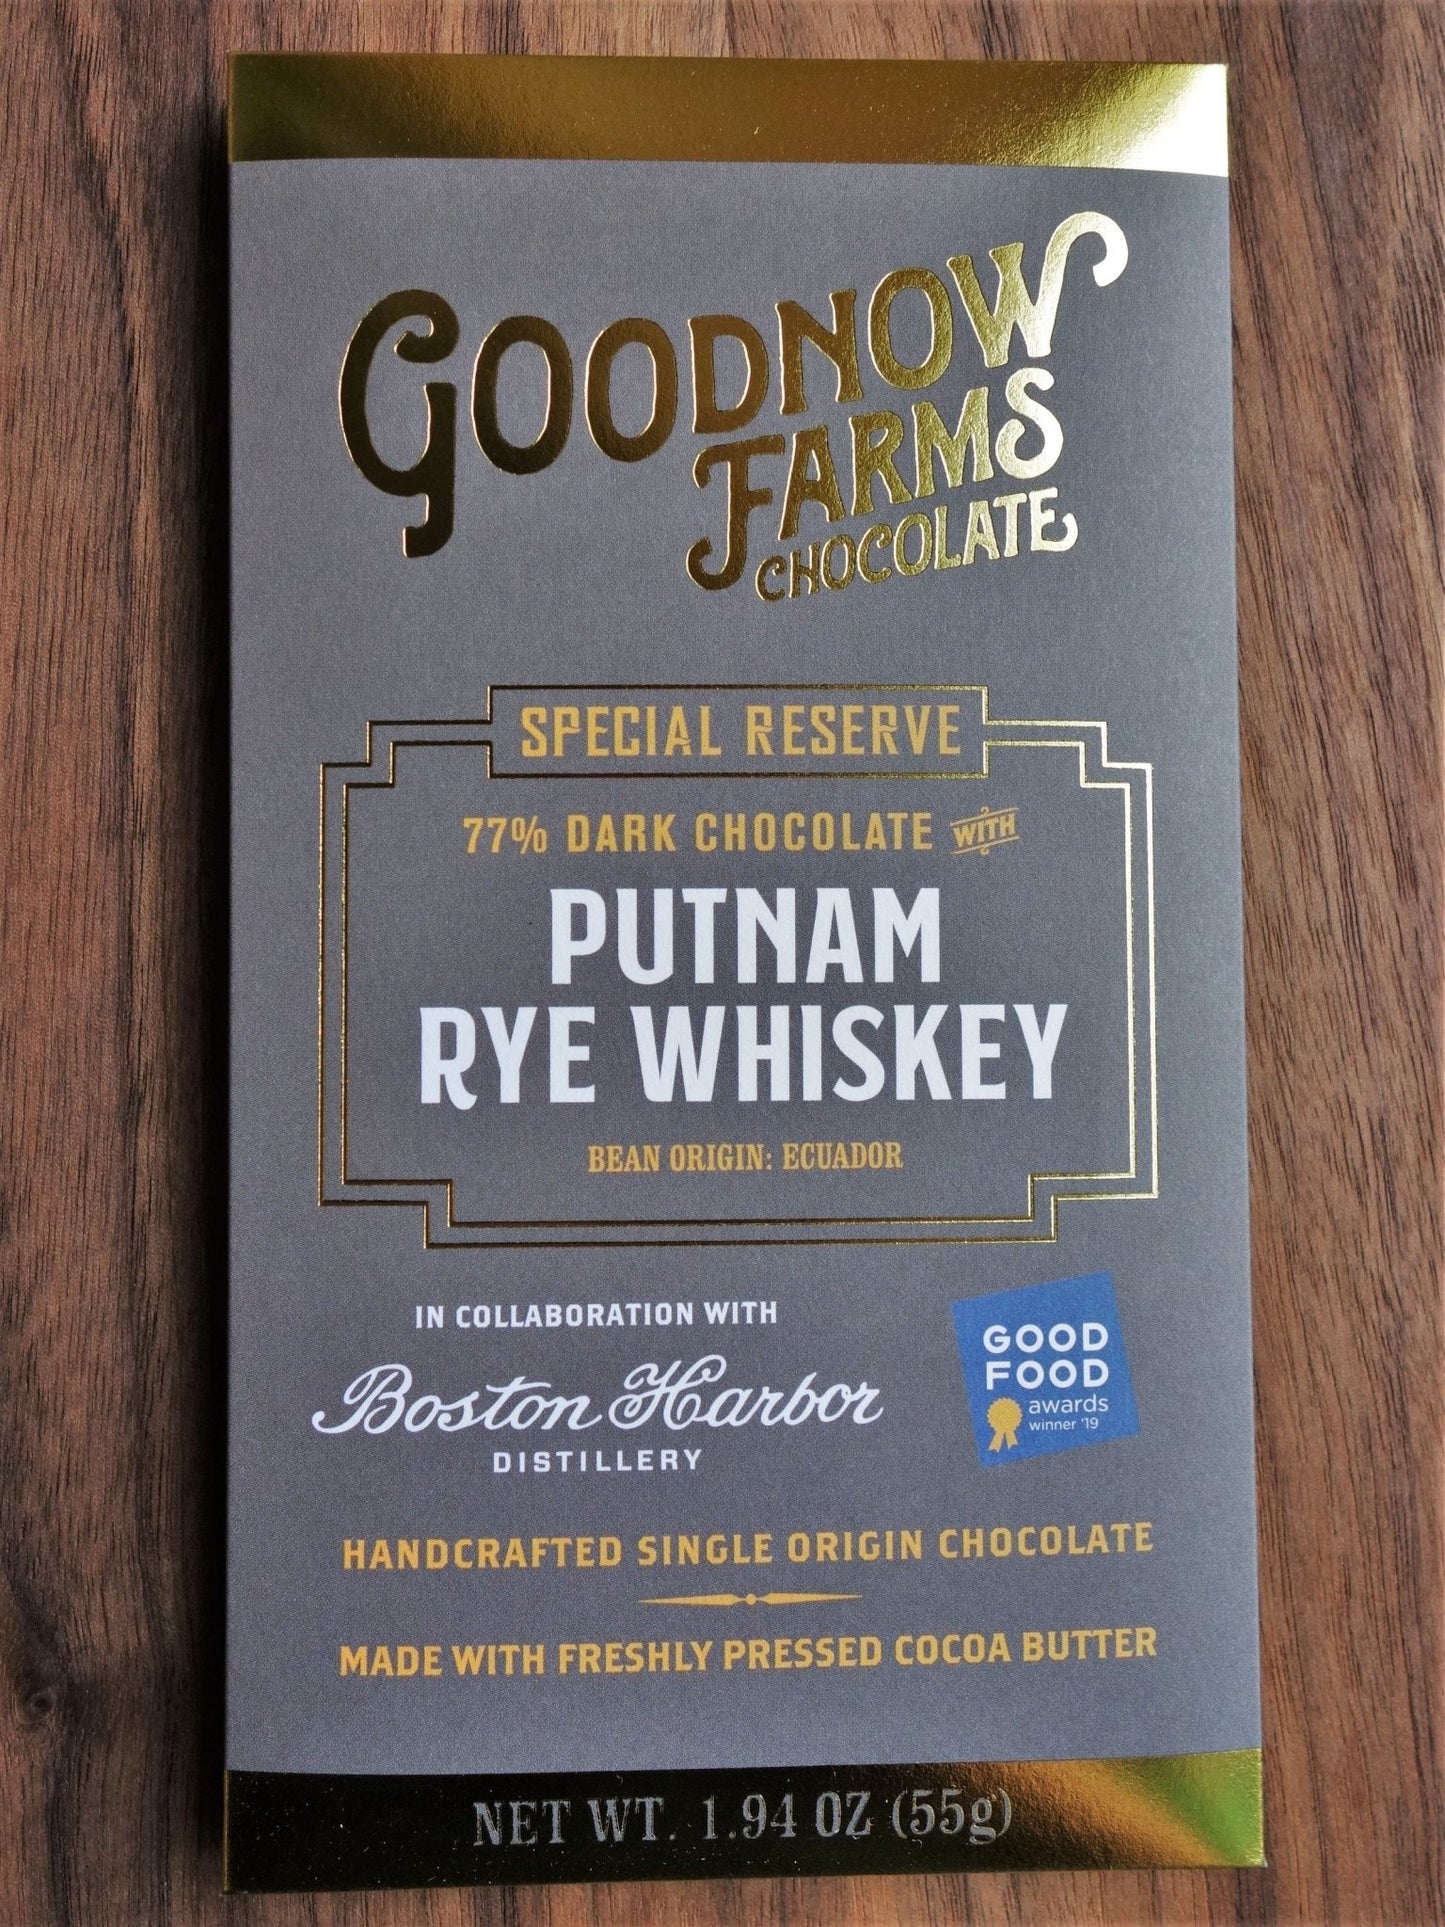 Goodnow farms Rye Whiskey Putnam 77 - Mongers' Provisions